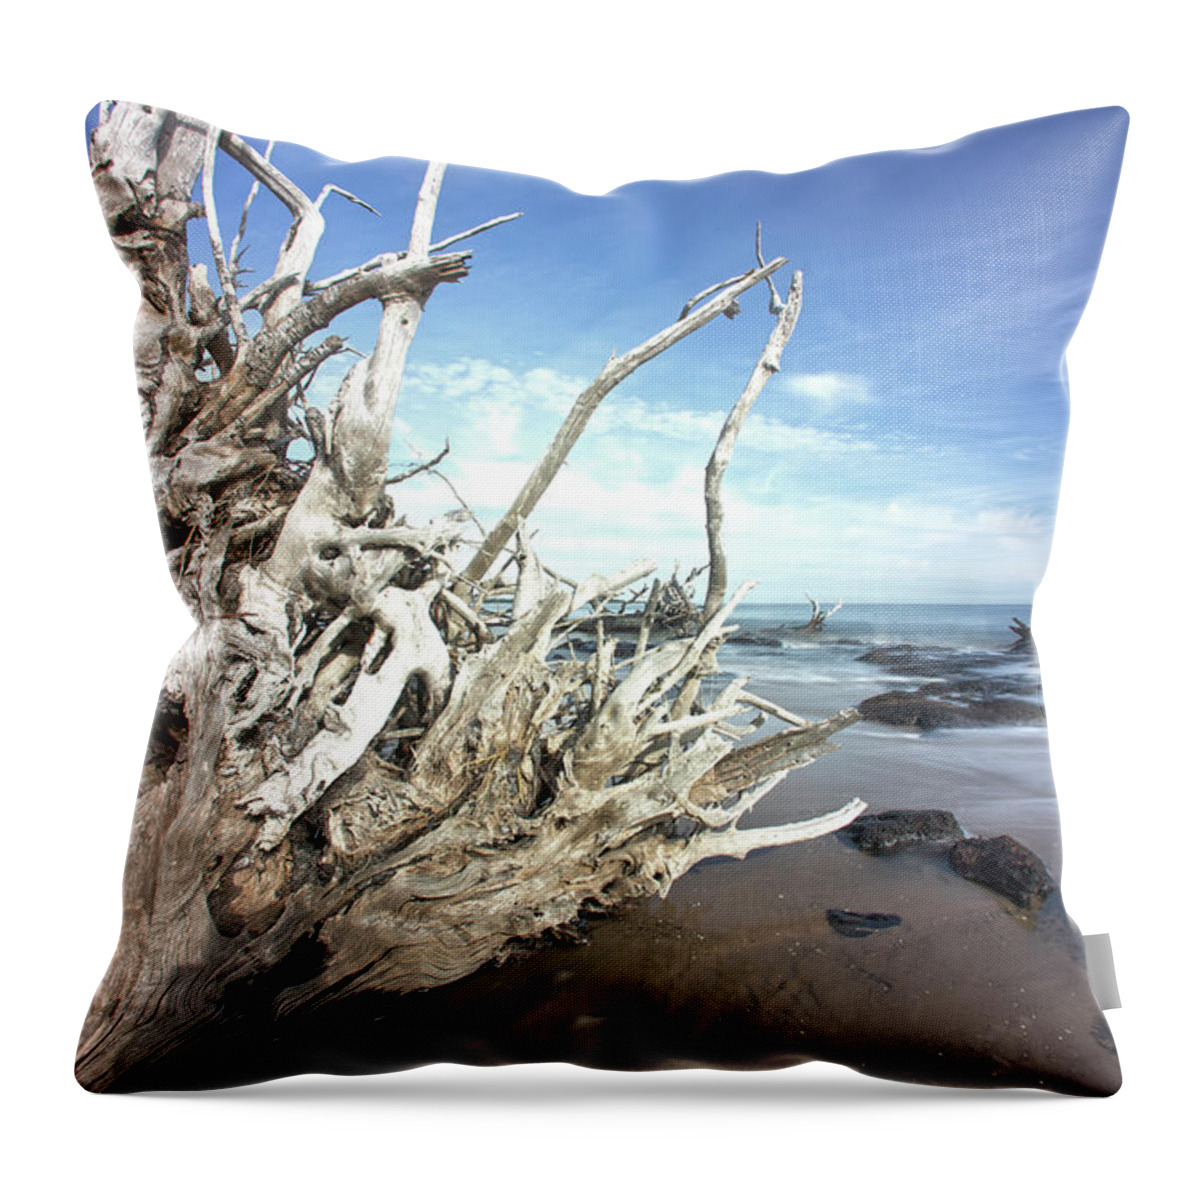 Ocean Throw Pillow featuring the photograph In the Rocks by Robert Och